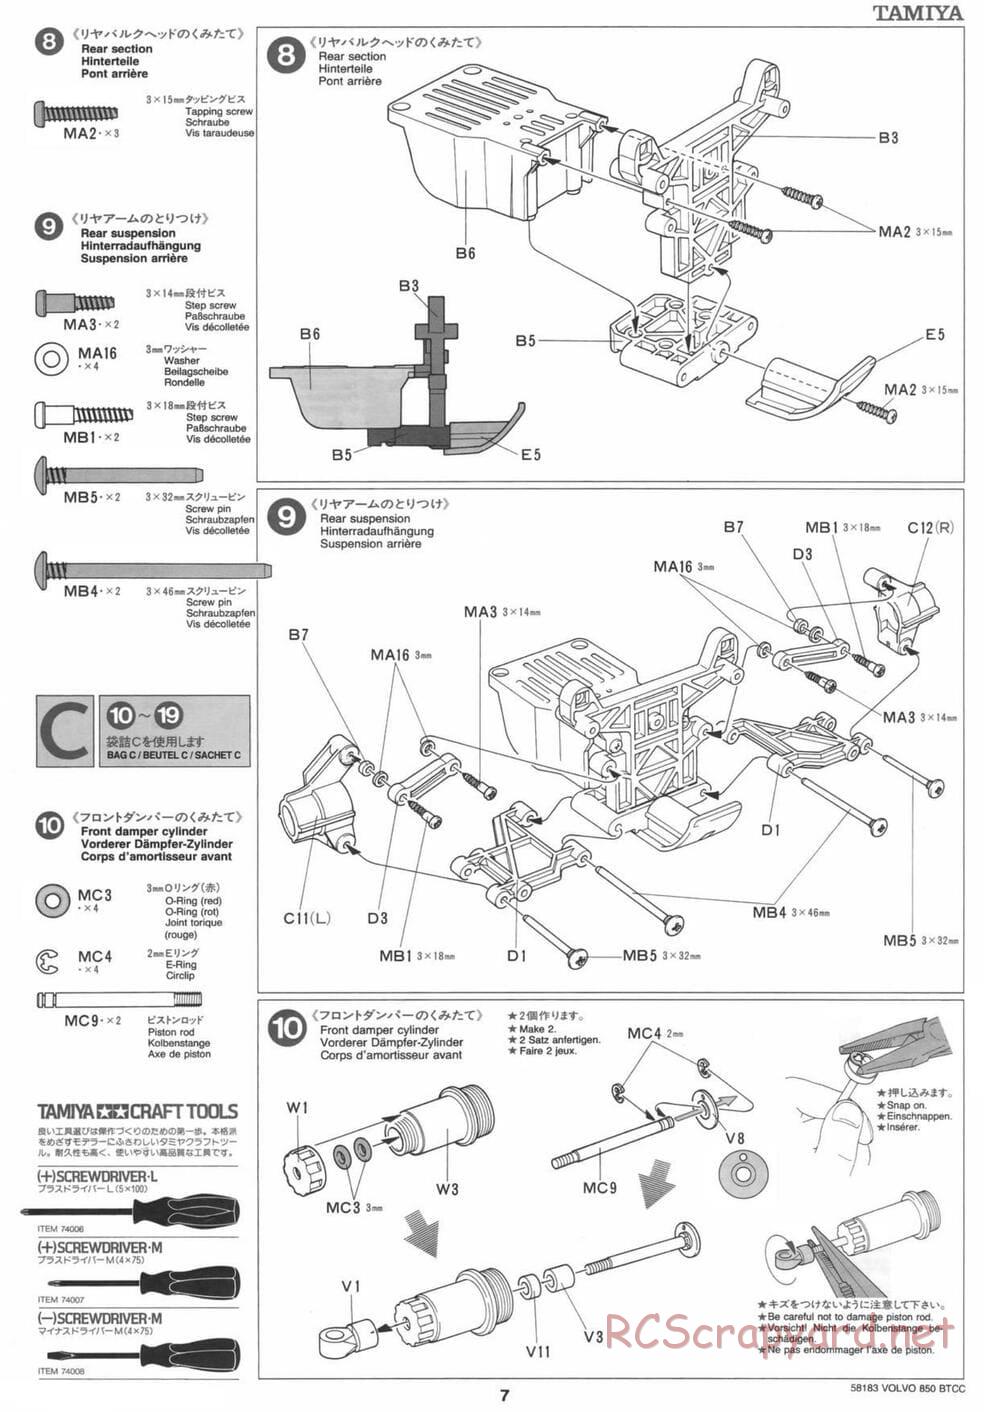 Tamiya - Volvo 850 BTCC - FF-01 Chassis - Manual - Page 7